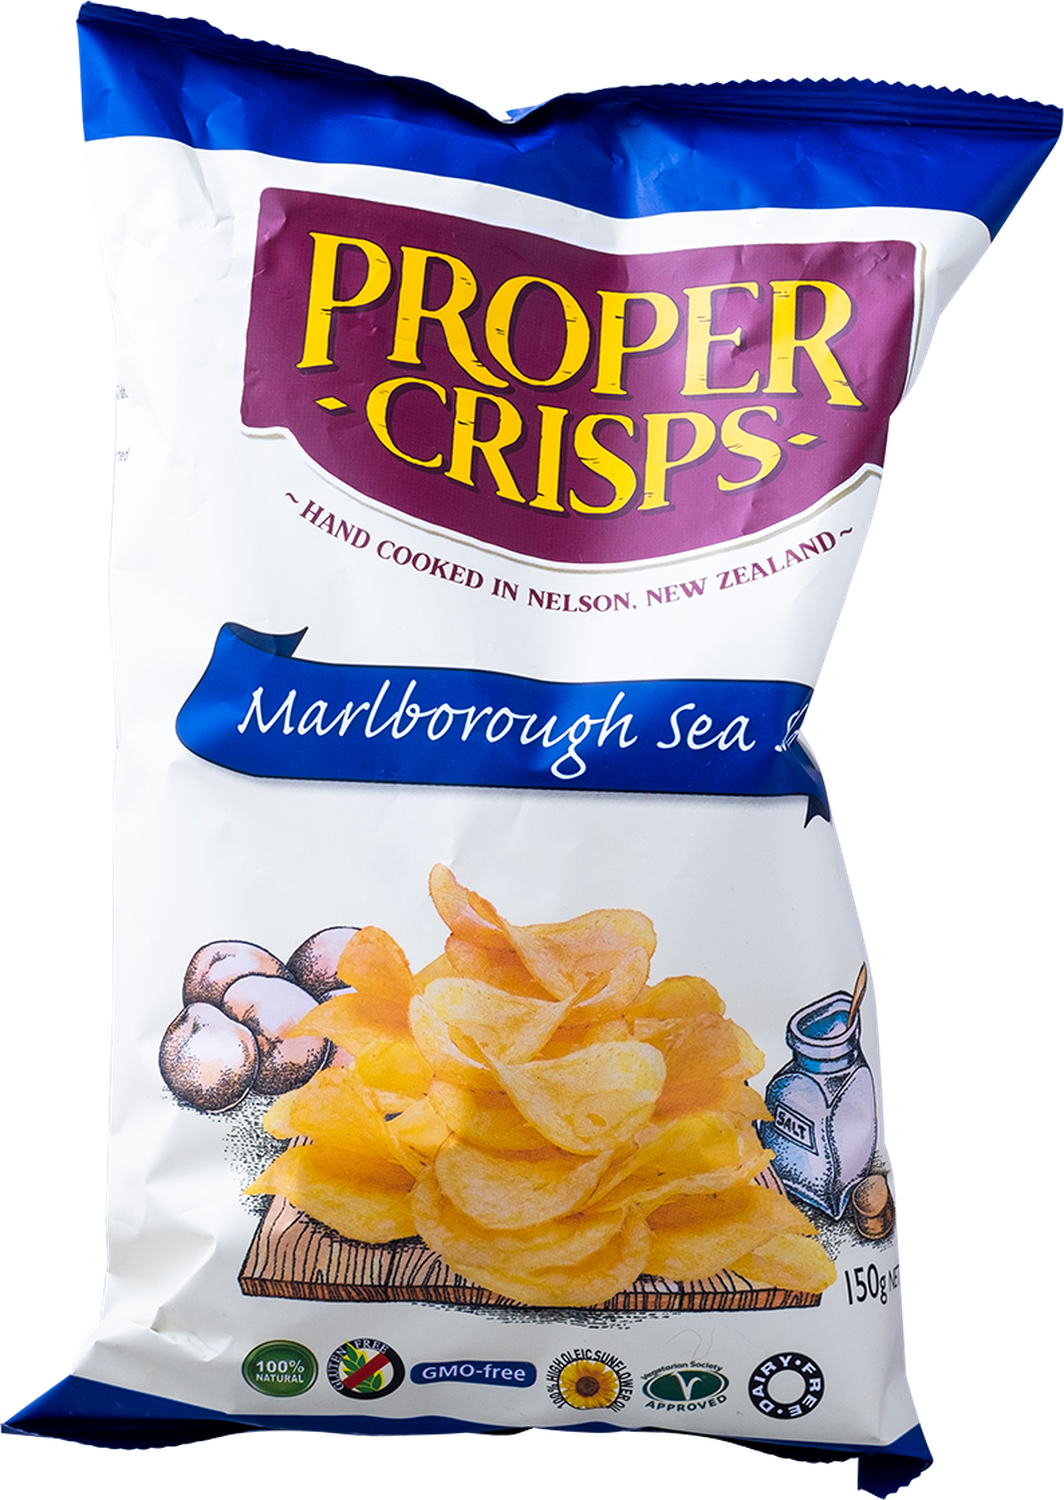 Proper Crisps - Marlborough Sea Salt